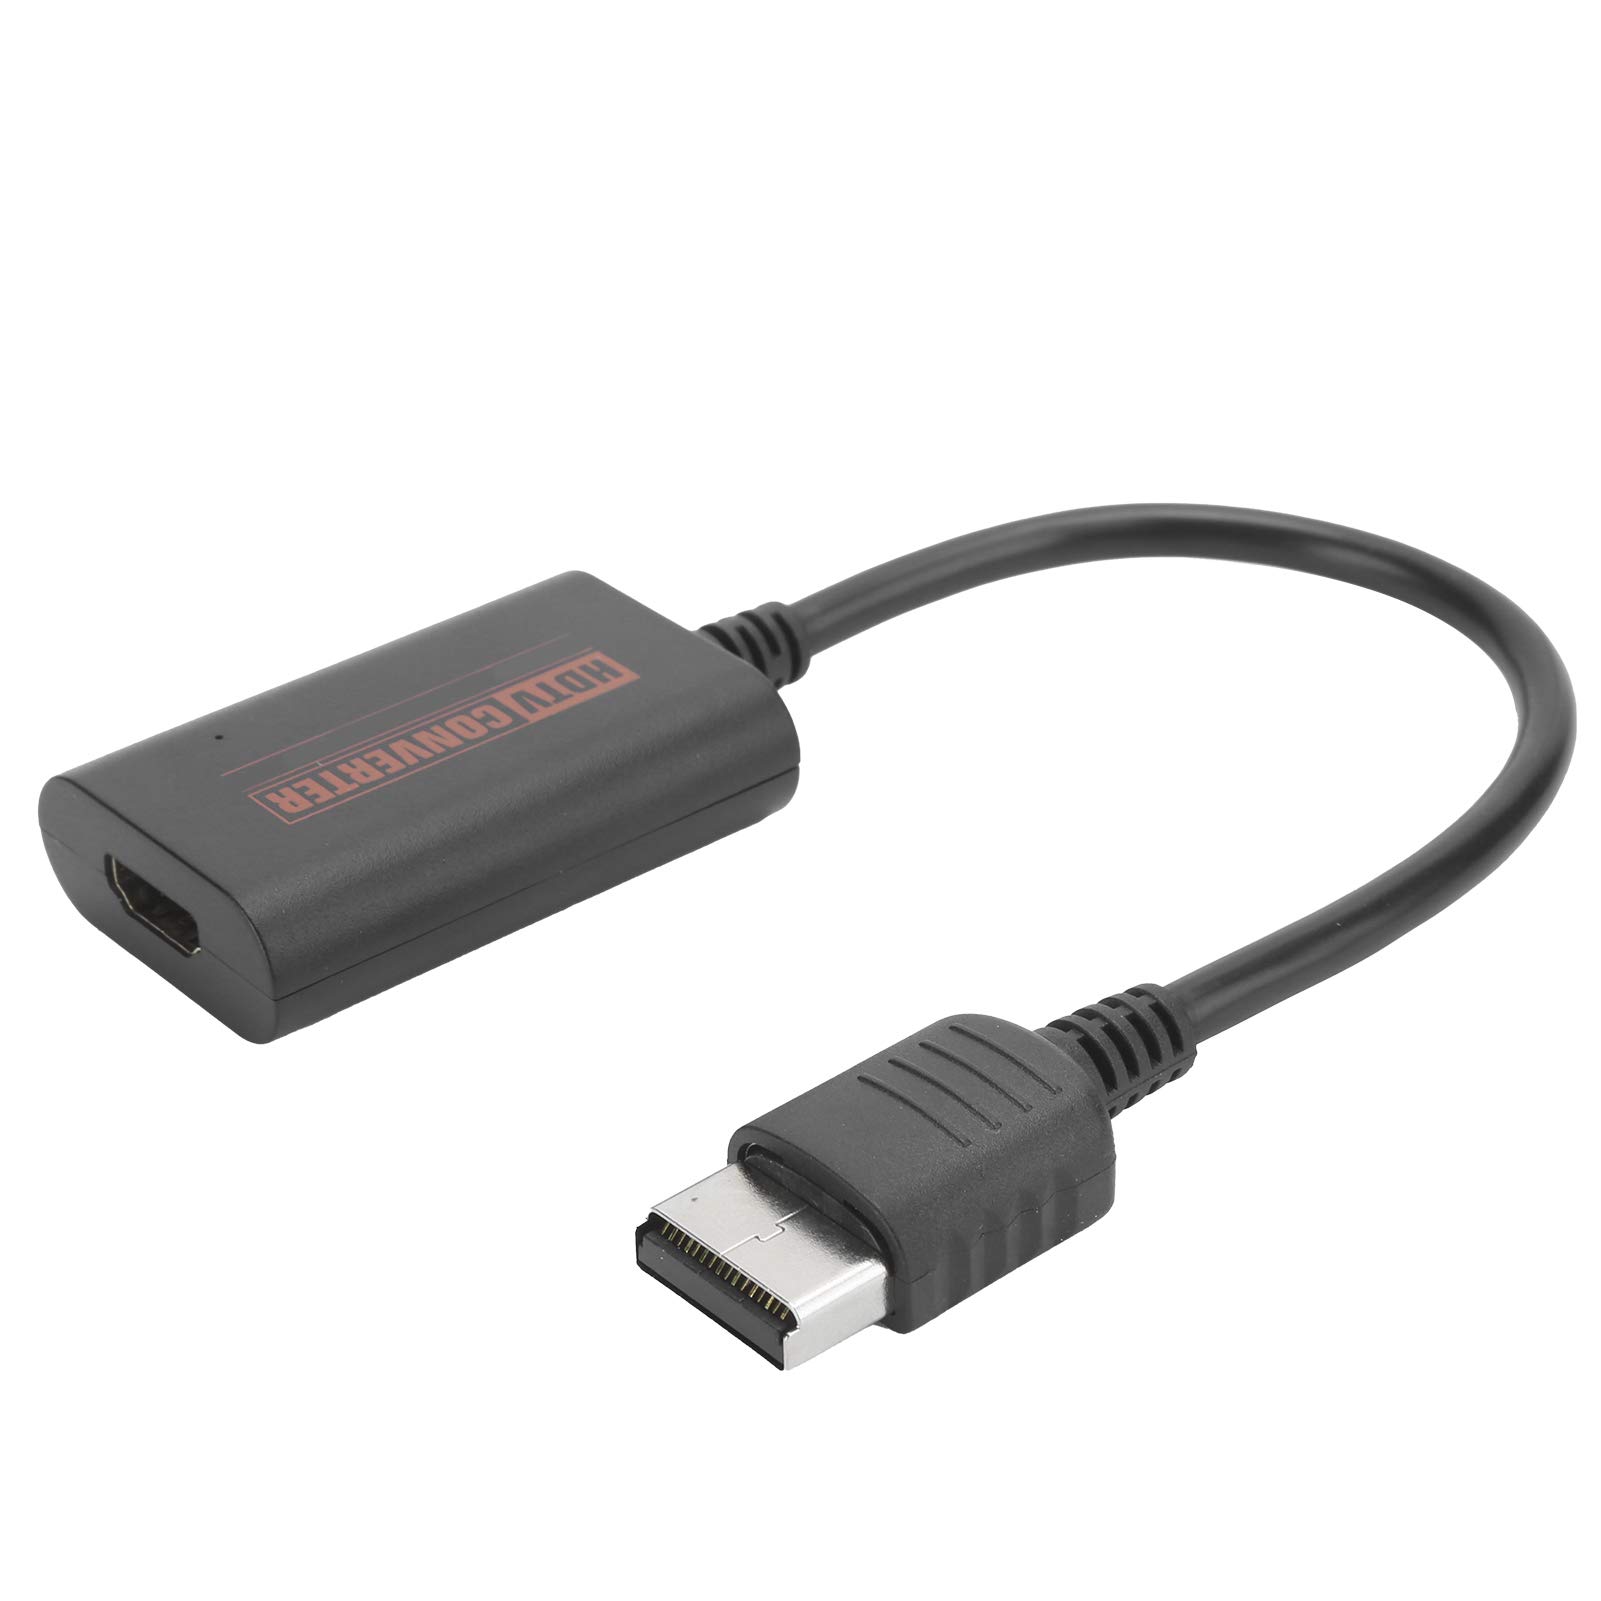 Cuifati HDMI-Adapter für Dreamcast High Definition Simultan-Display-Adapter DC-Konsole Plug & Play Sega Dreamcast VGA-zu-HDMI-Konverter für Sega Dreamcast